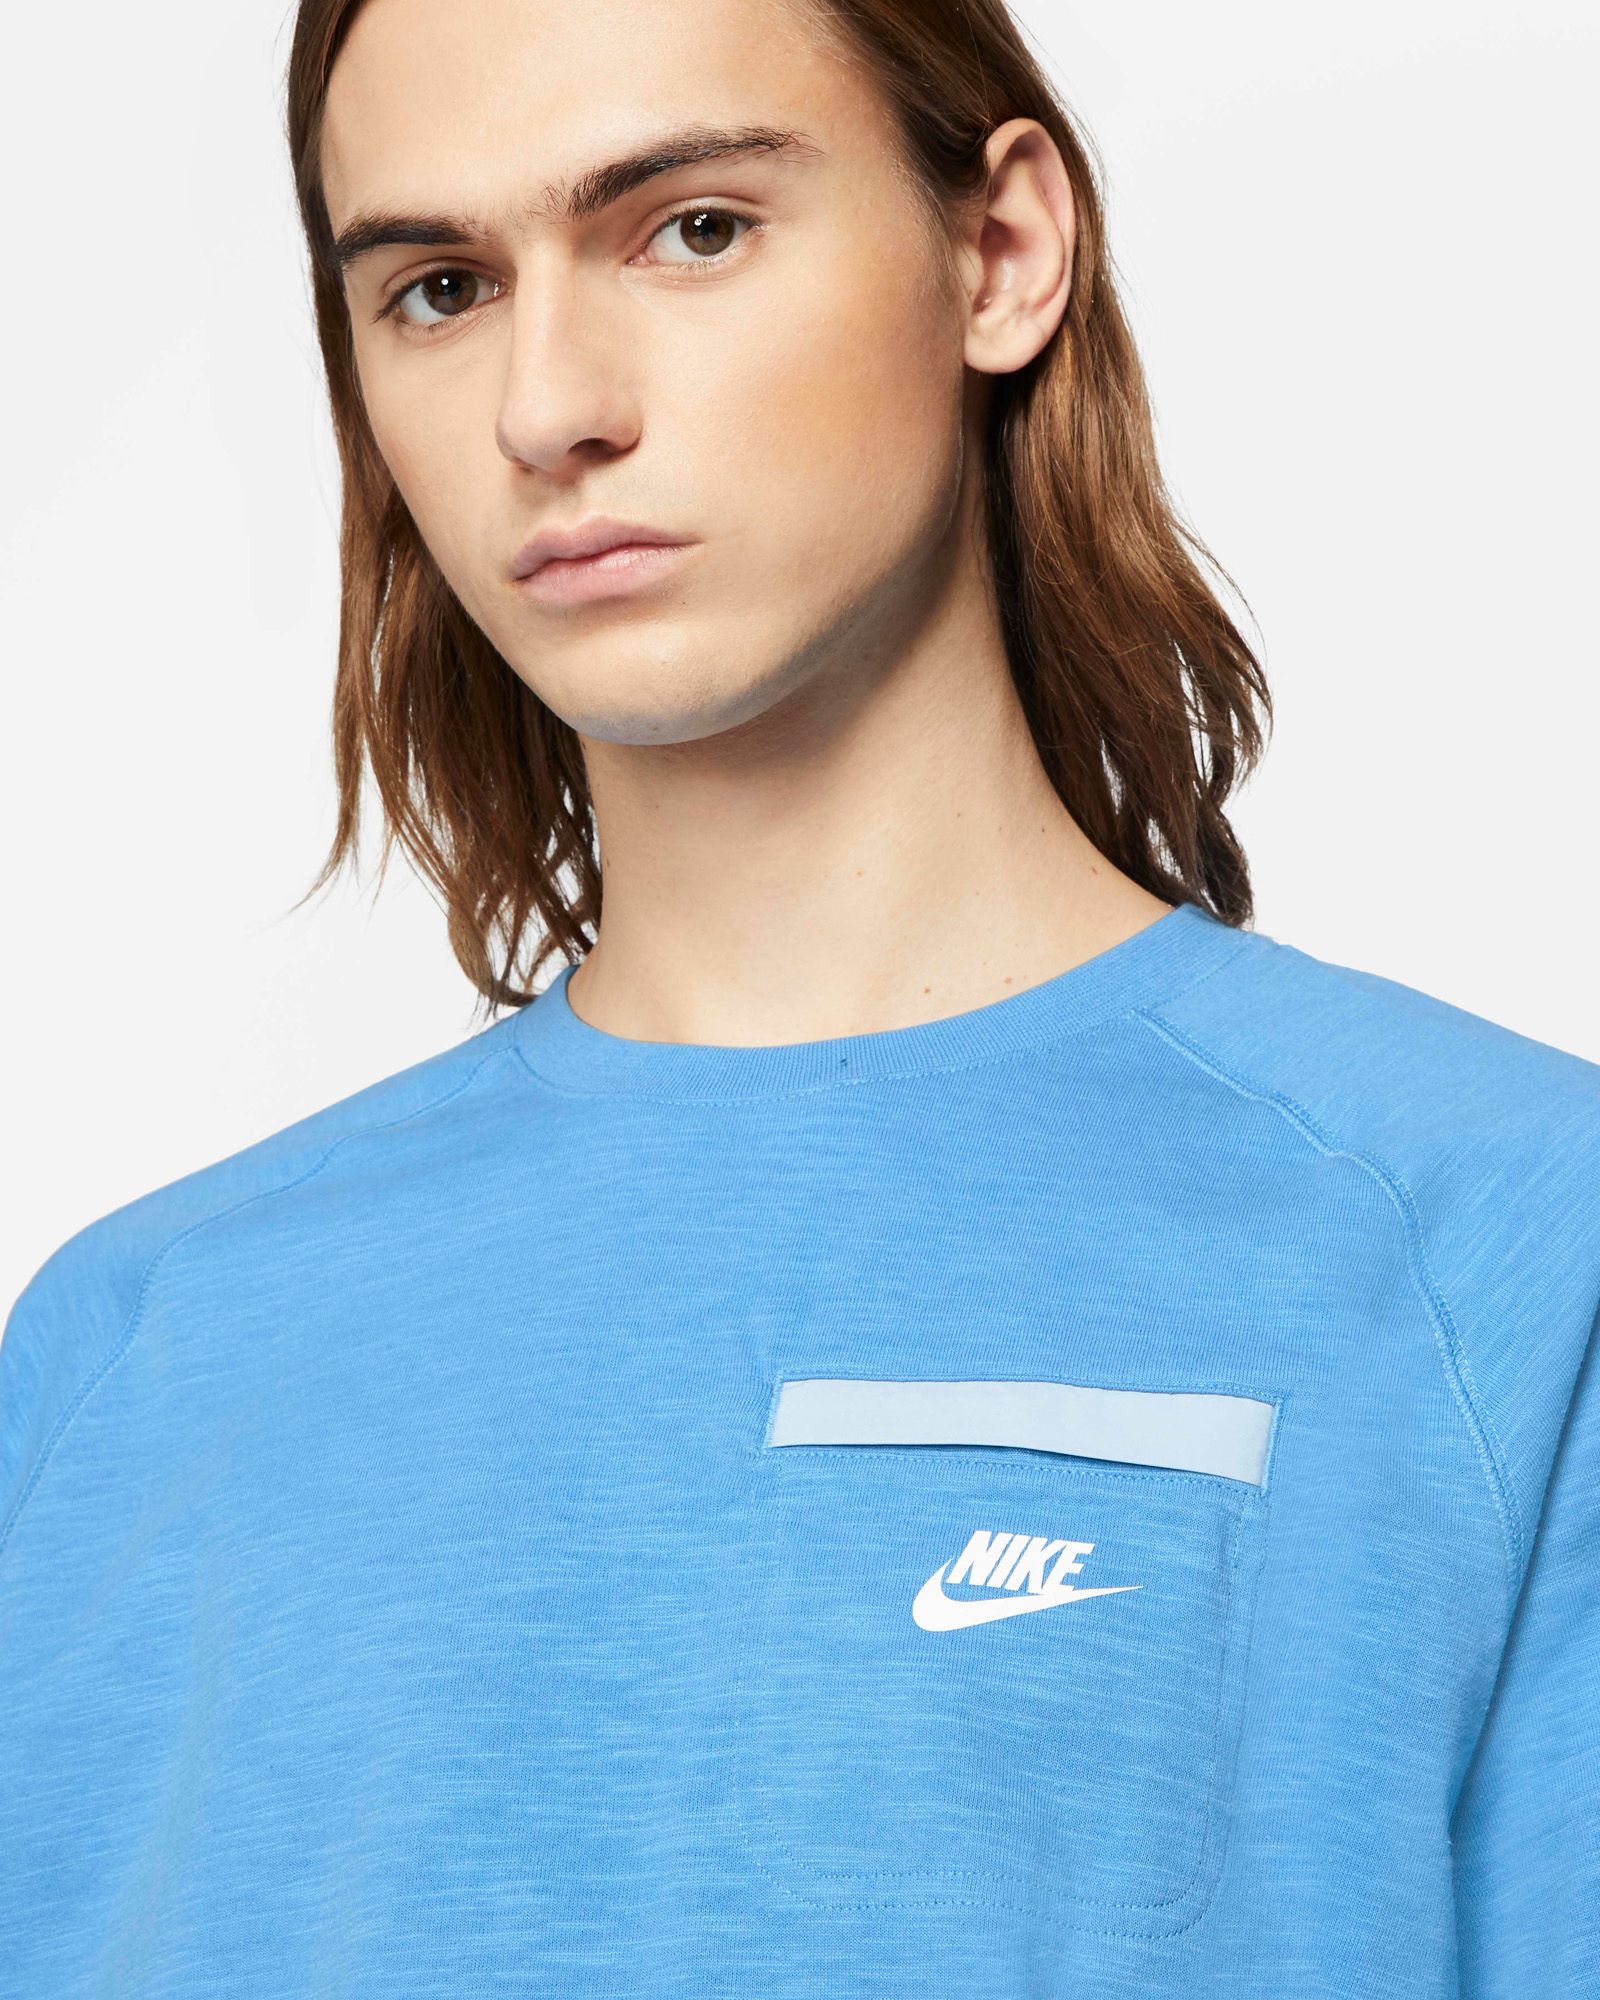  Nike Sportswear Premium Essentials Pocket T-Shirt - Coast 